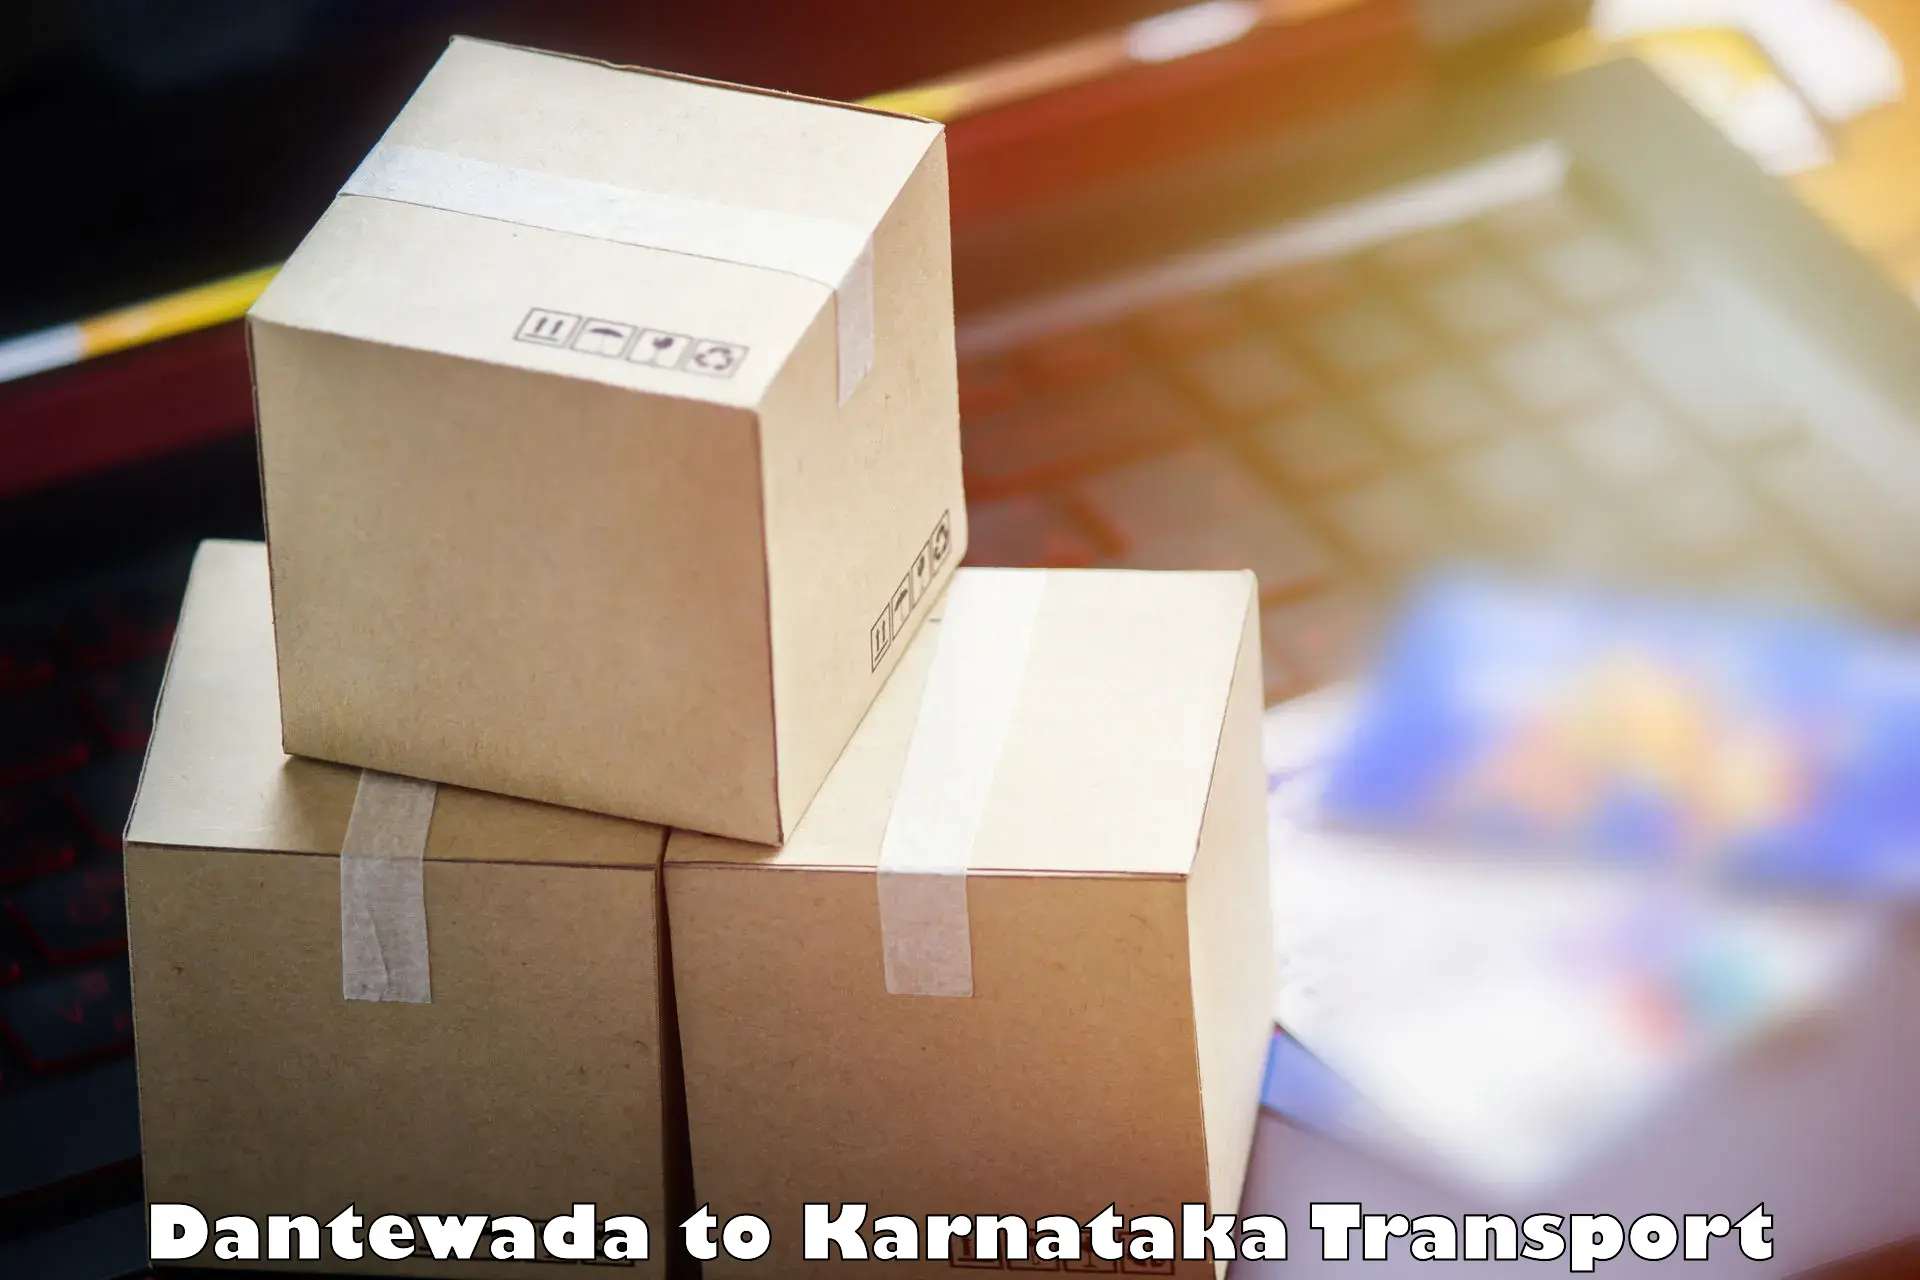 Shipping partner Dantewada to Banavara